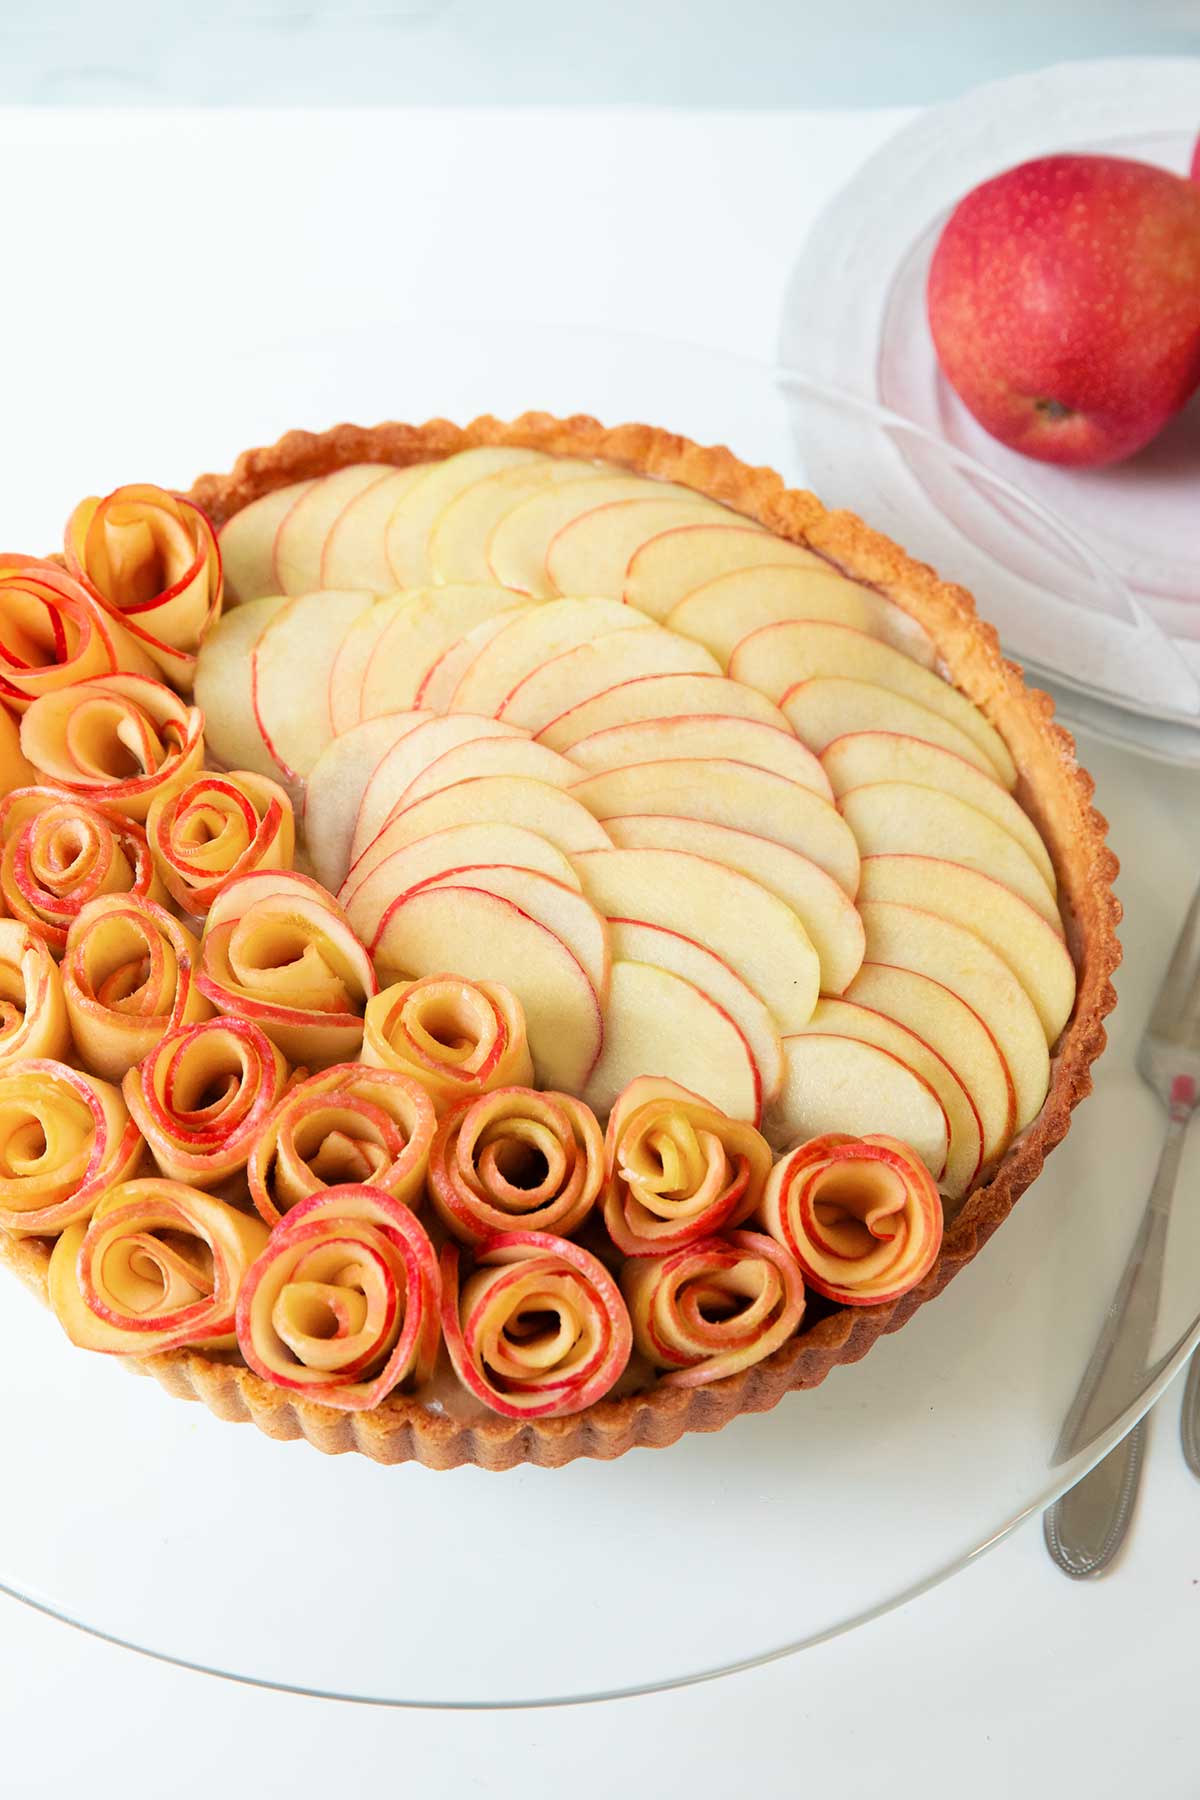 A Sweetango apple rose tart on a glass cake stand